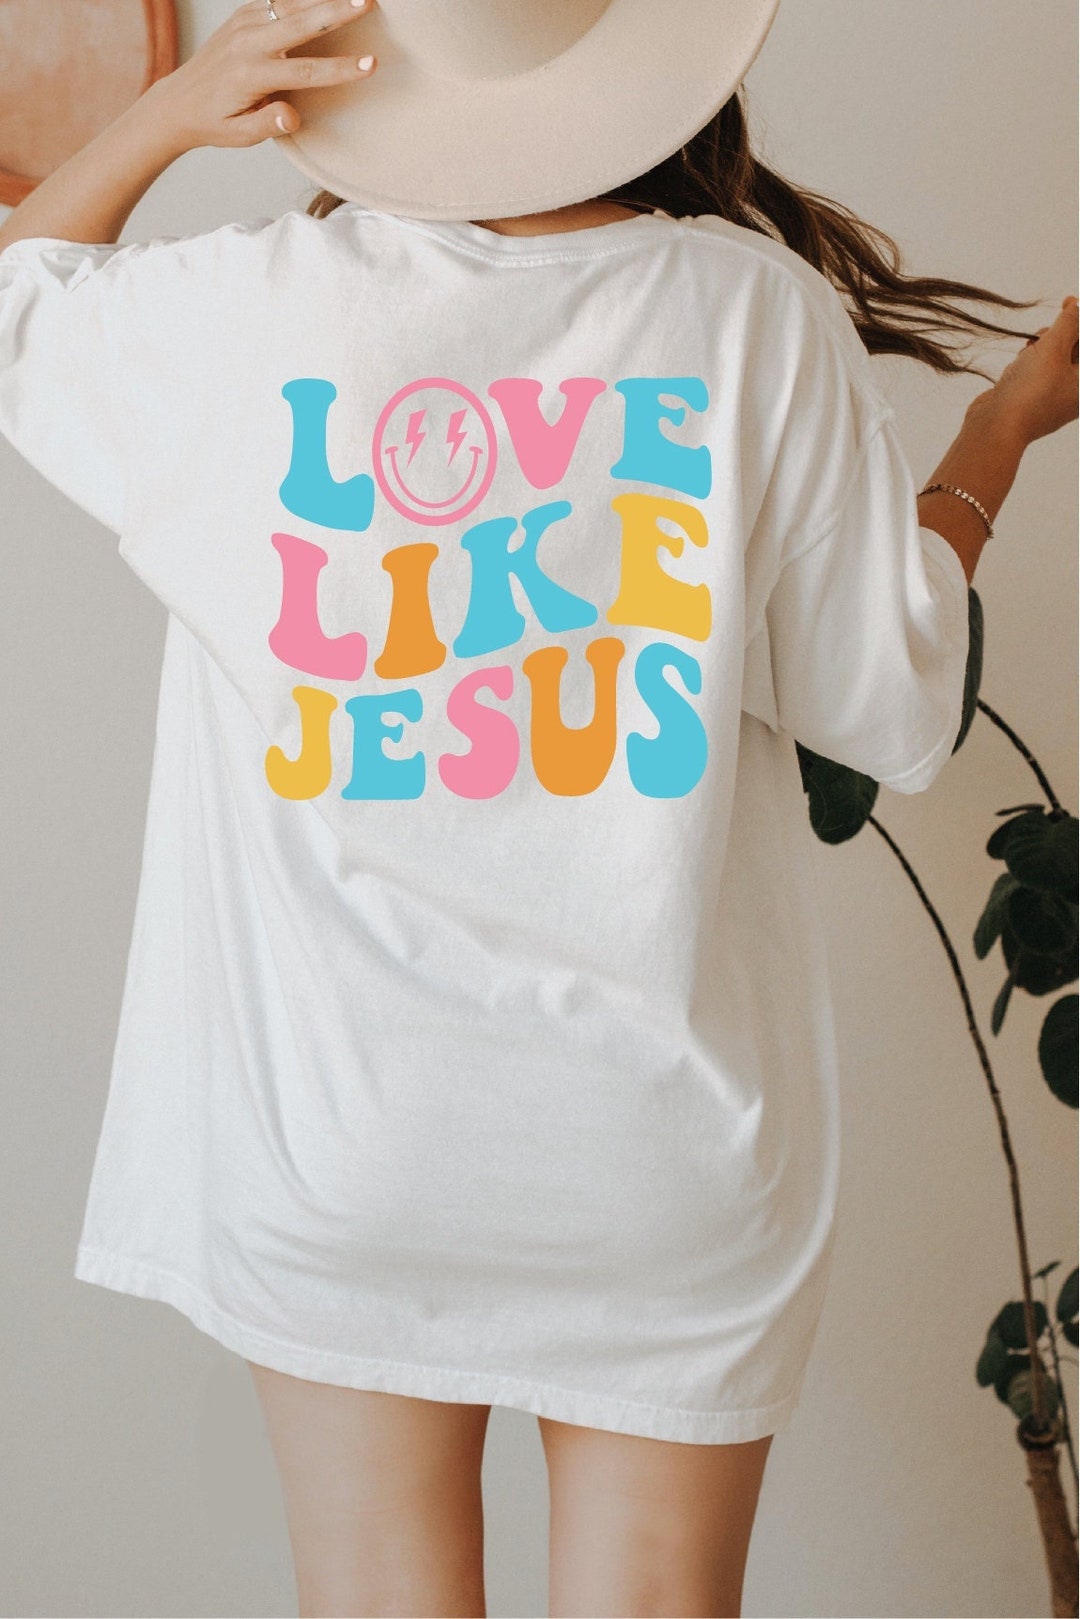 Oversized Christian Shirt Love Like Jesus Smiley Face on - Etsy